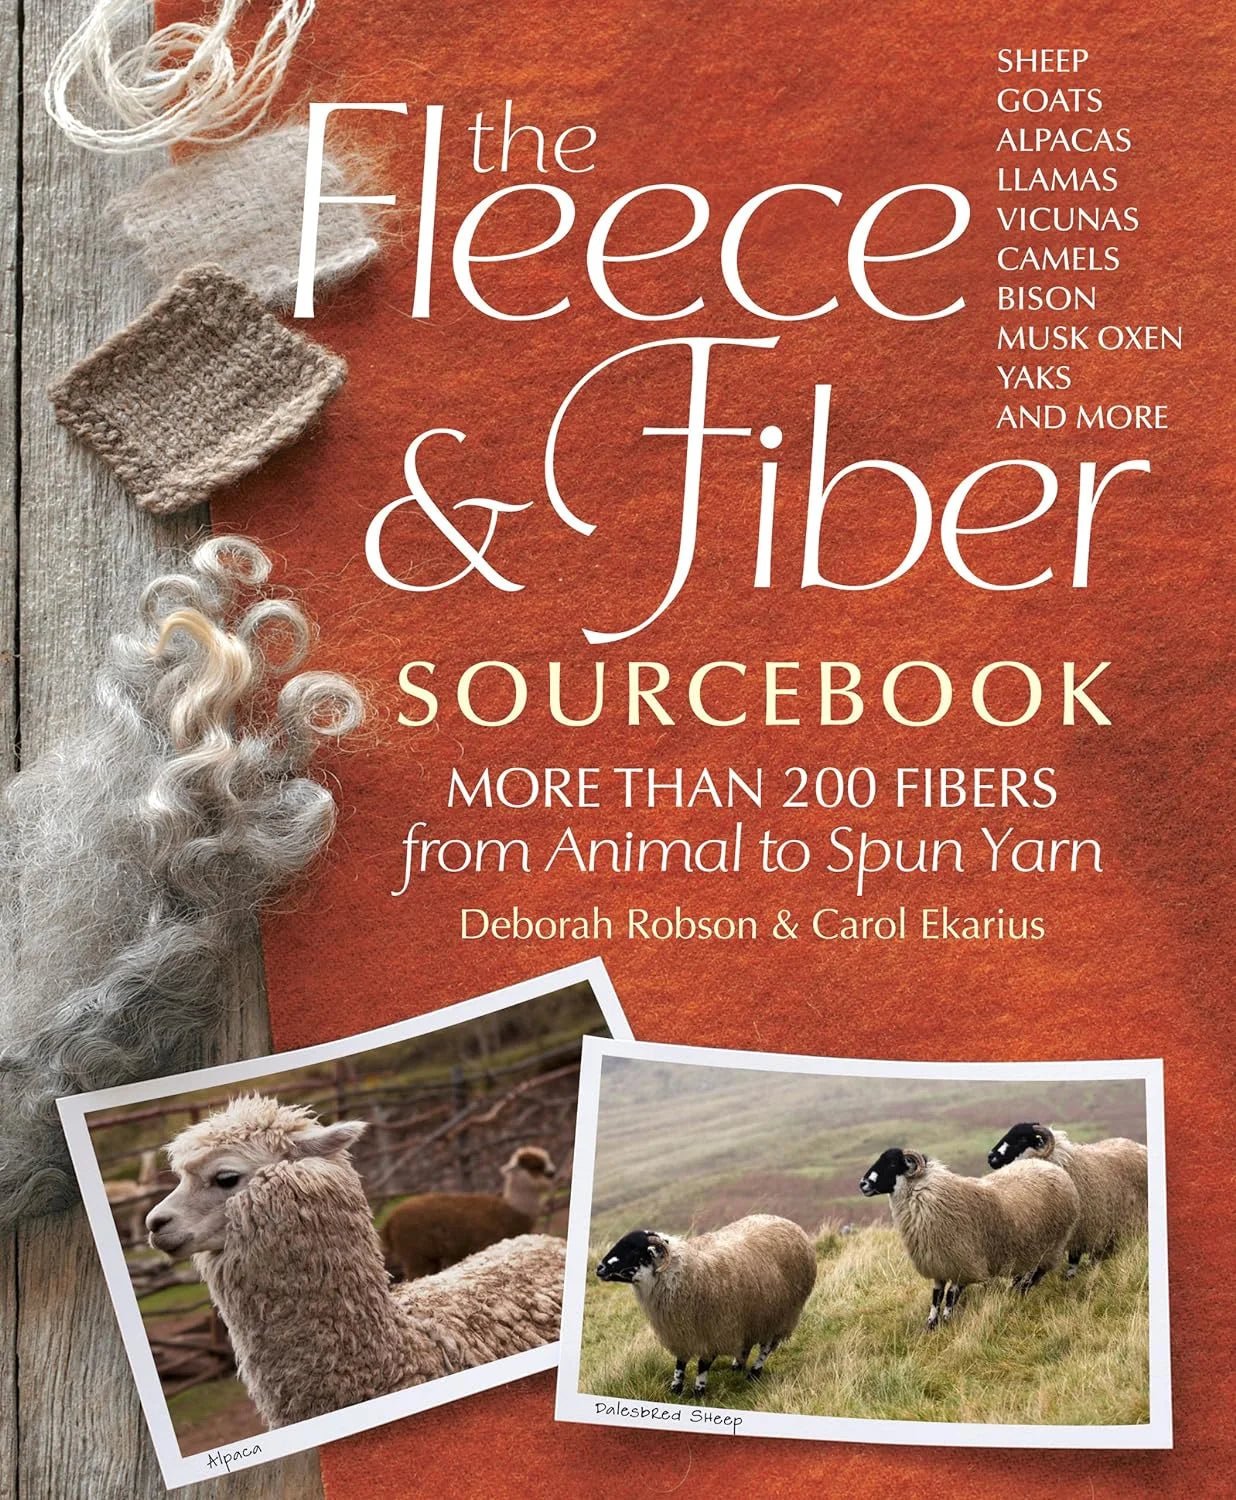 The Fleece & Fiber Sourcebook - Carol Ekarius and Deborah Robson - The Little Yarn Store